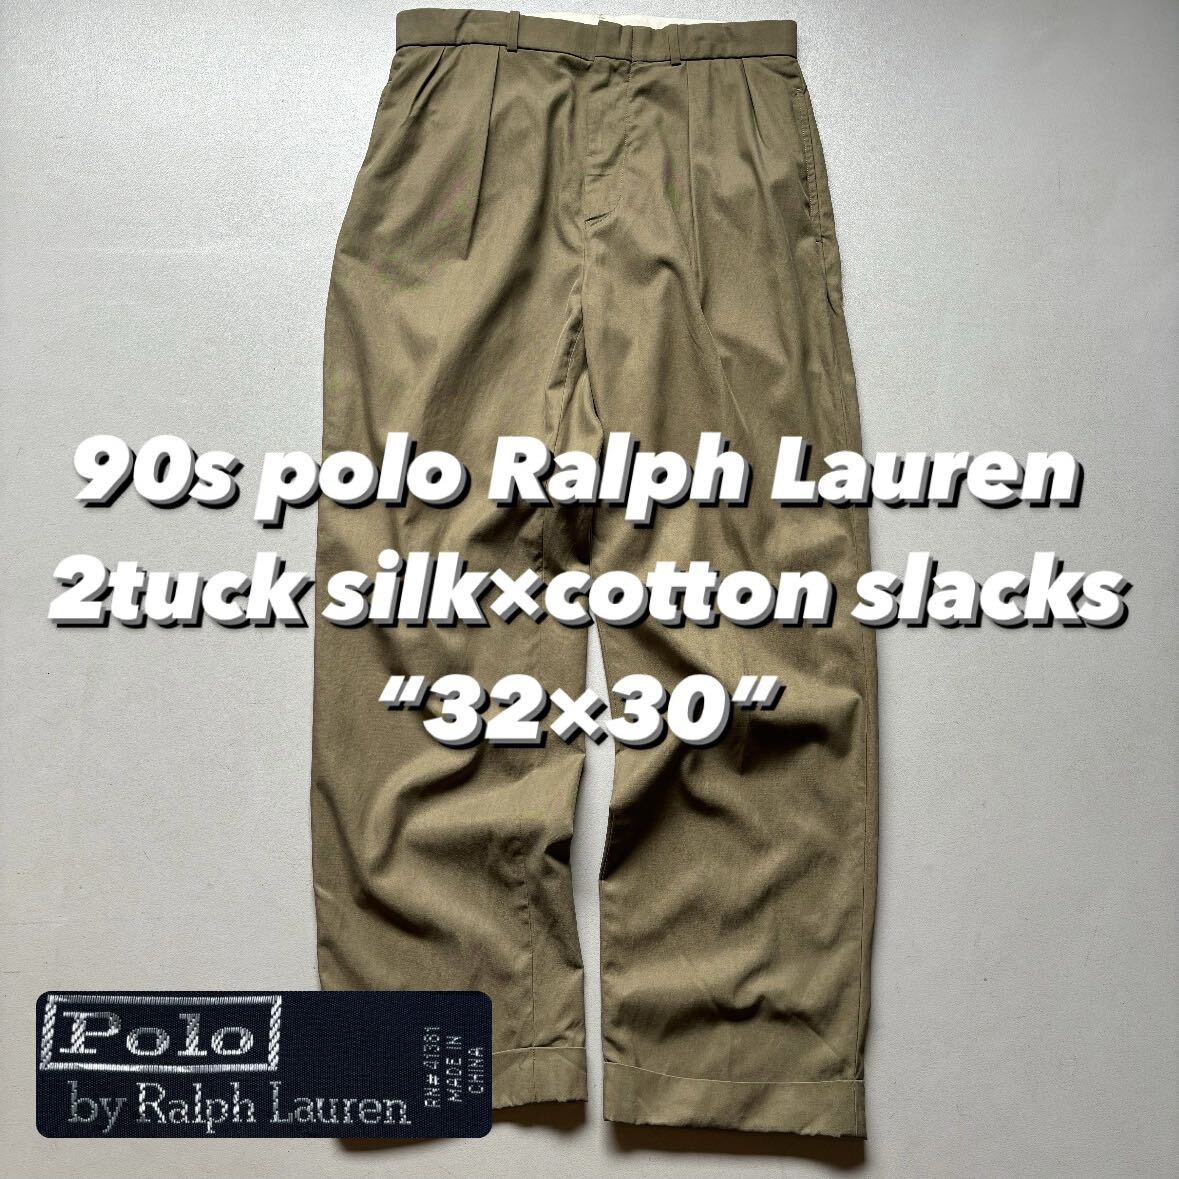 90s polo Ralph Lauren 2tuck silk×cotton slacks “32×30” 90年代 ラルフローレン 2タック シルクコットンスラックス